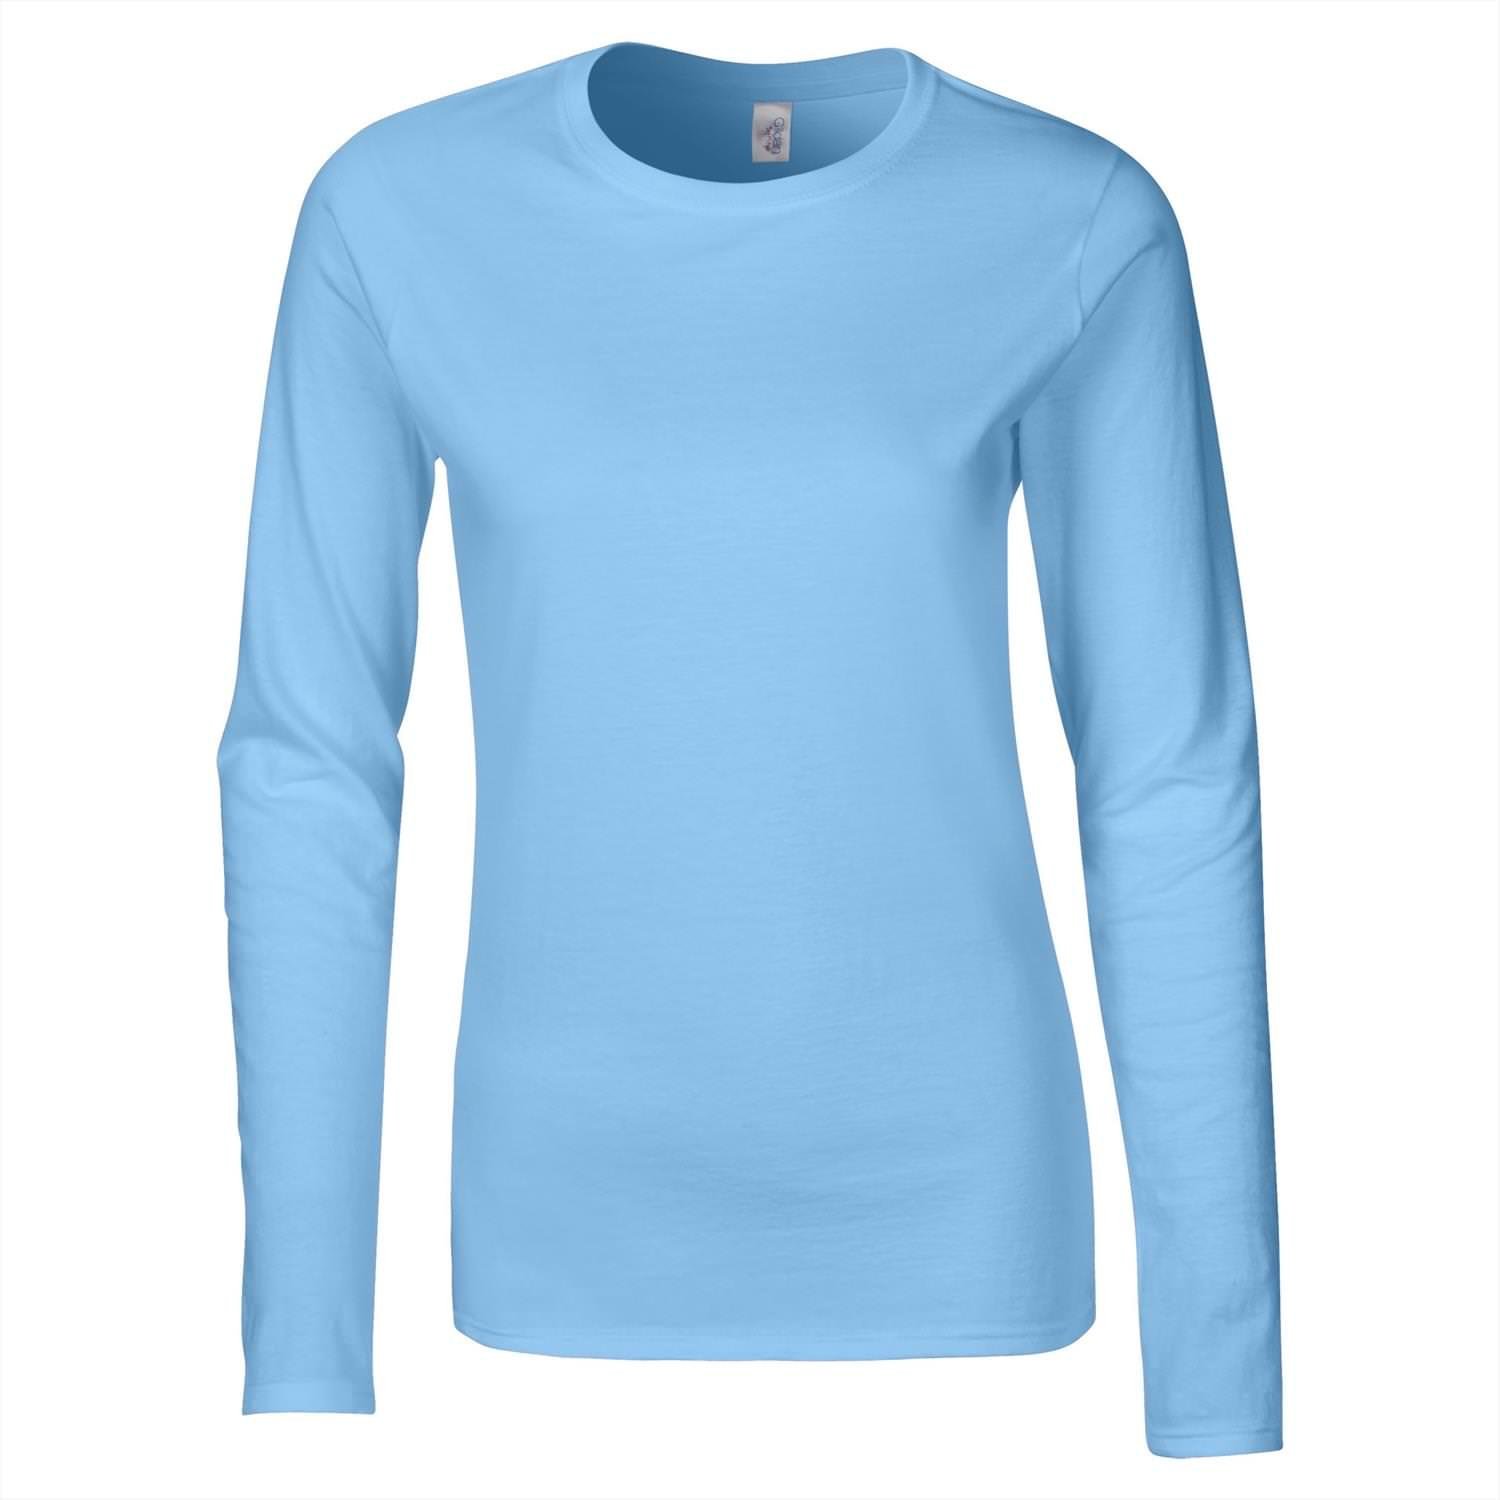 Cotton Blue T-Shirt for Women